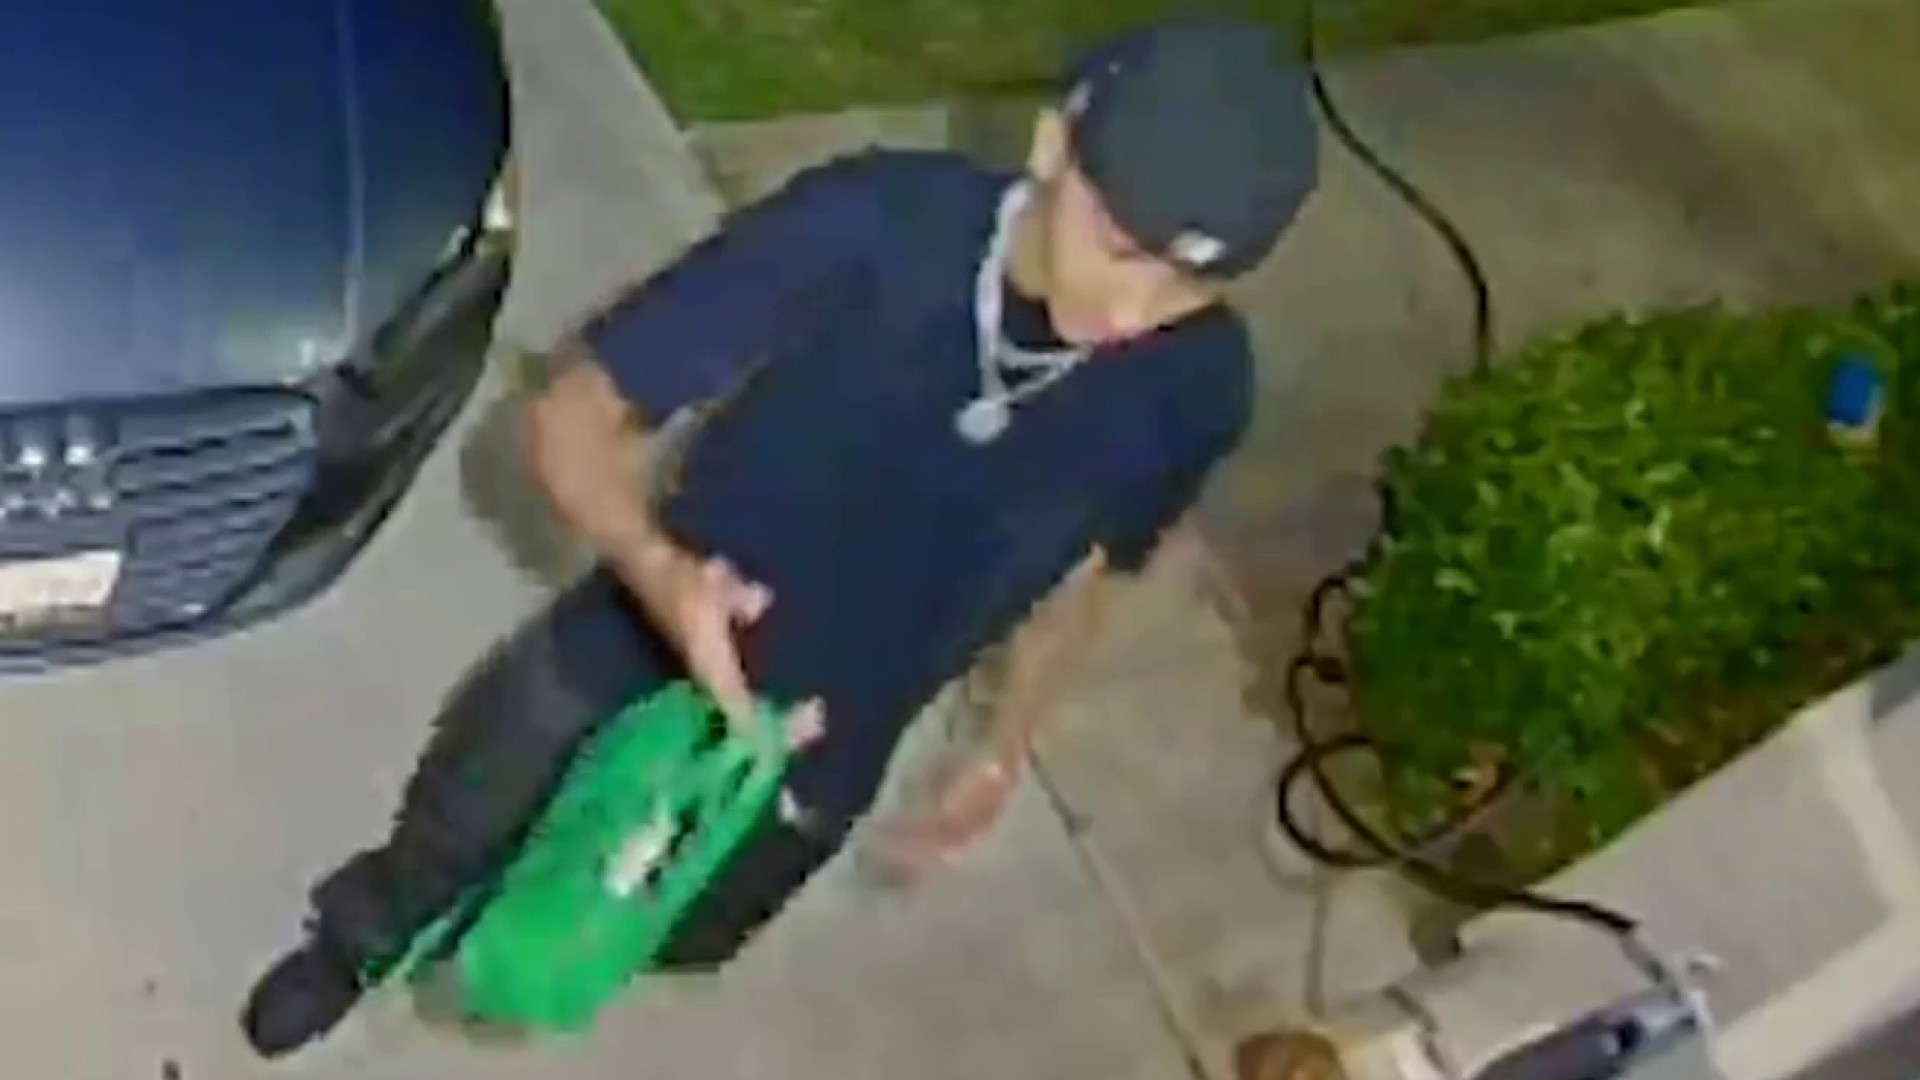 Teen returns lost purse in Chula Vista, California - Upworthy